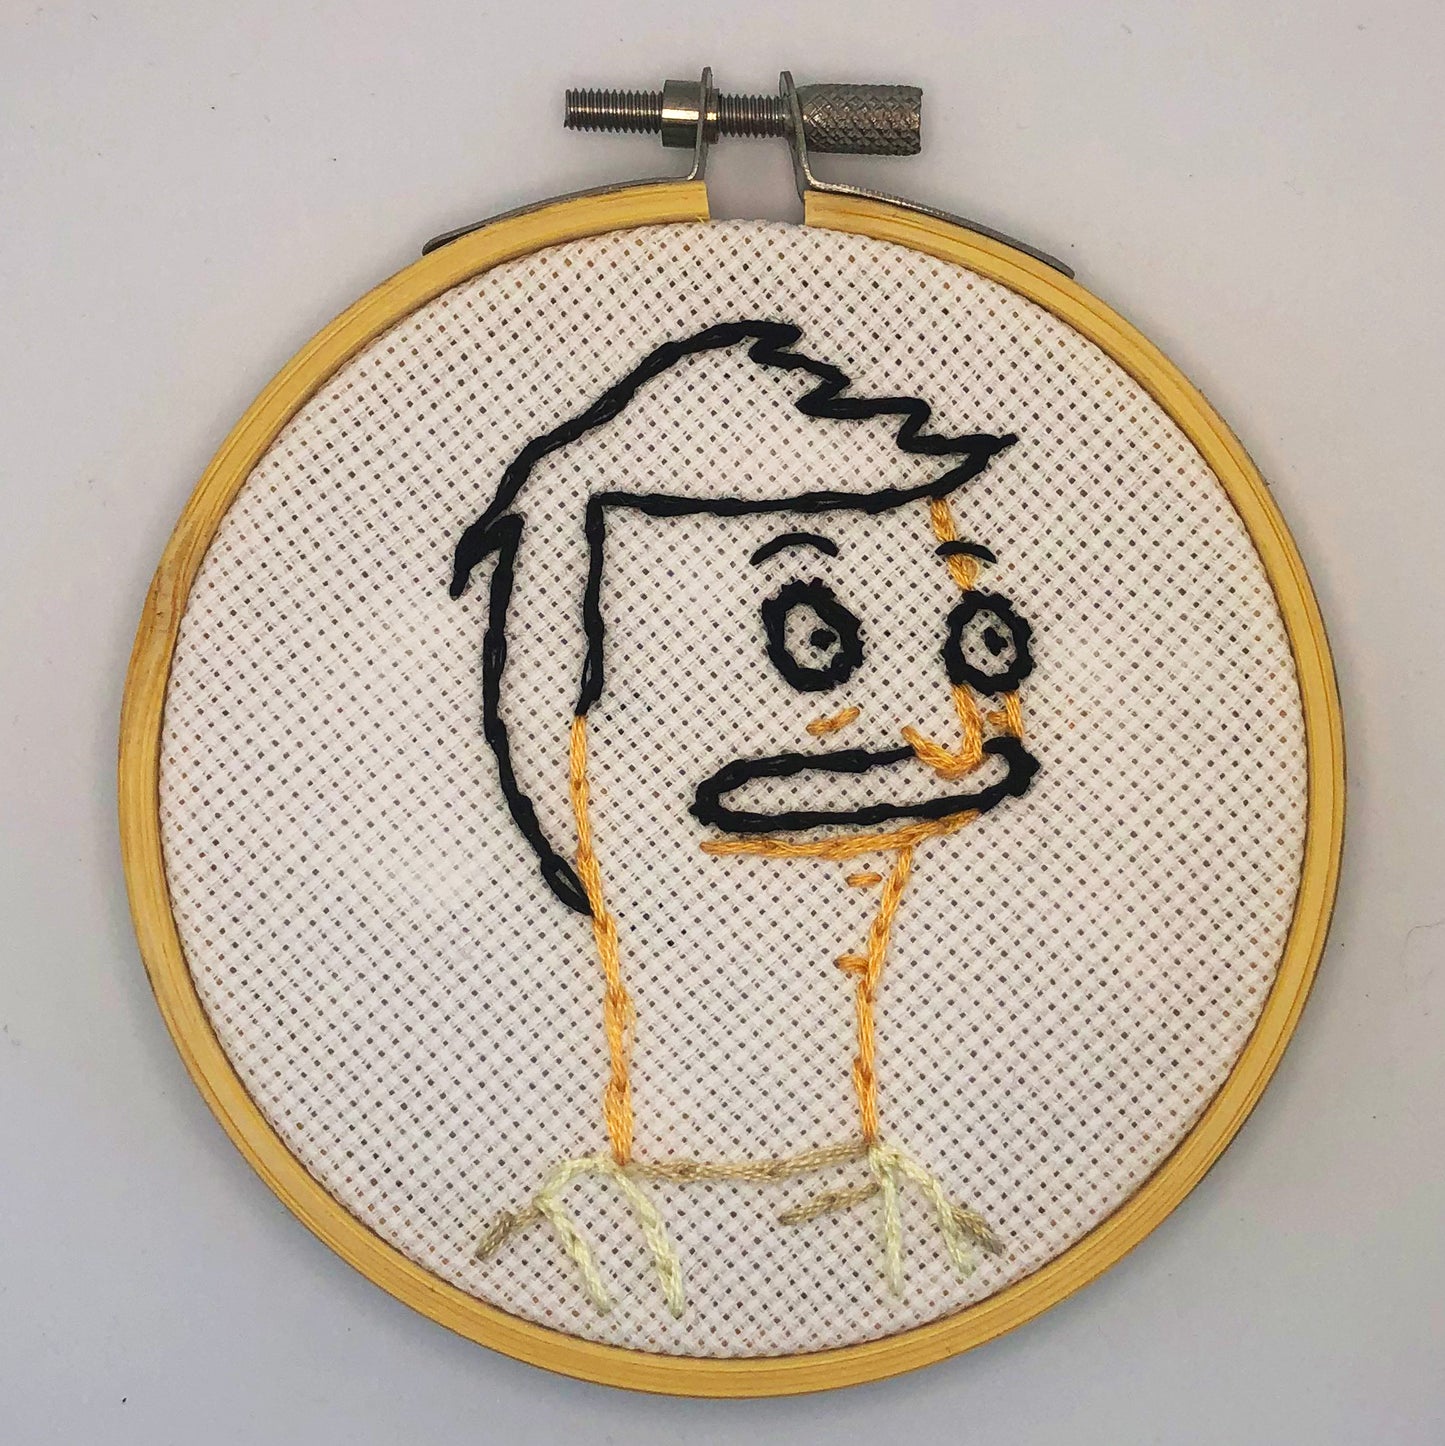 Bob's Burgers embroidery